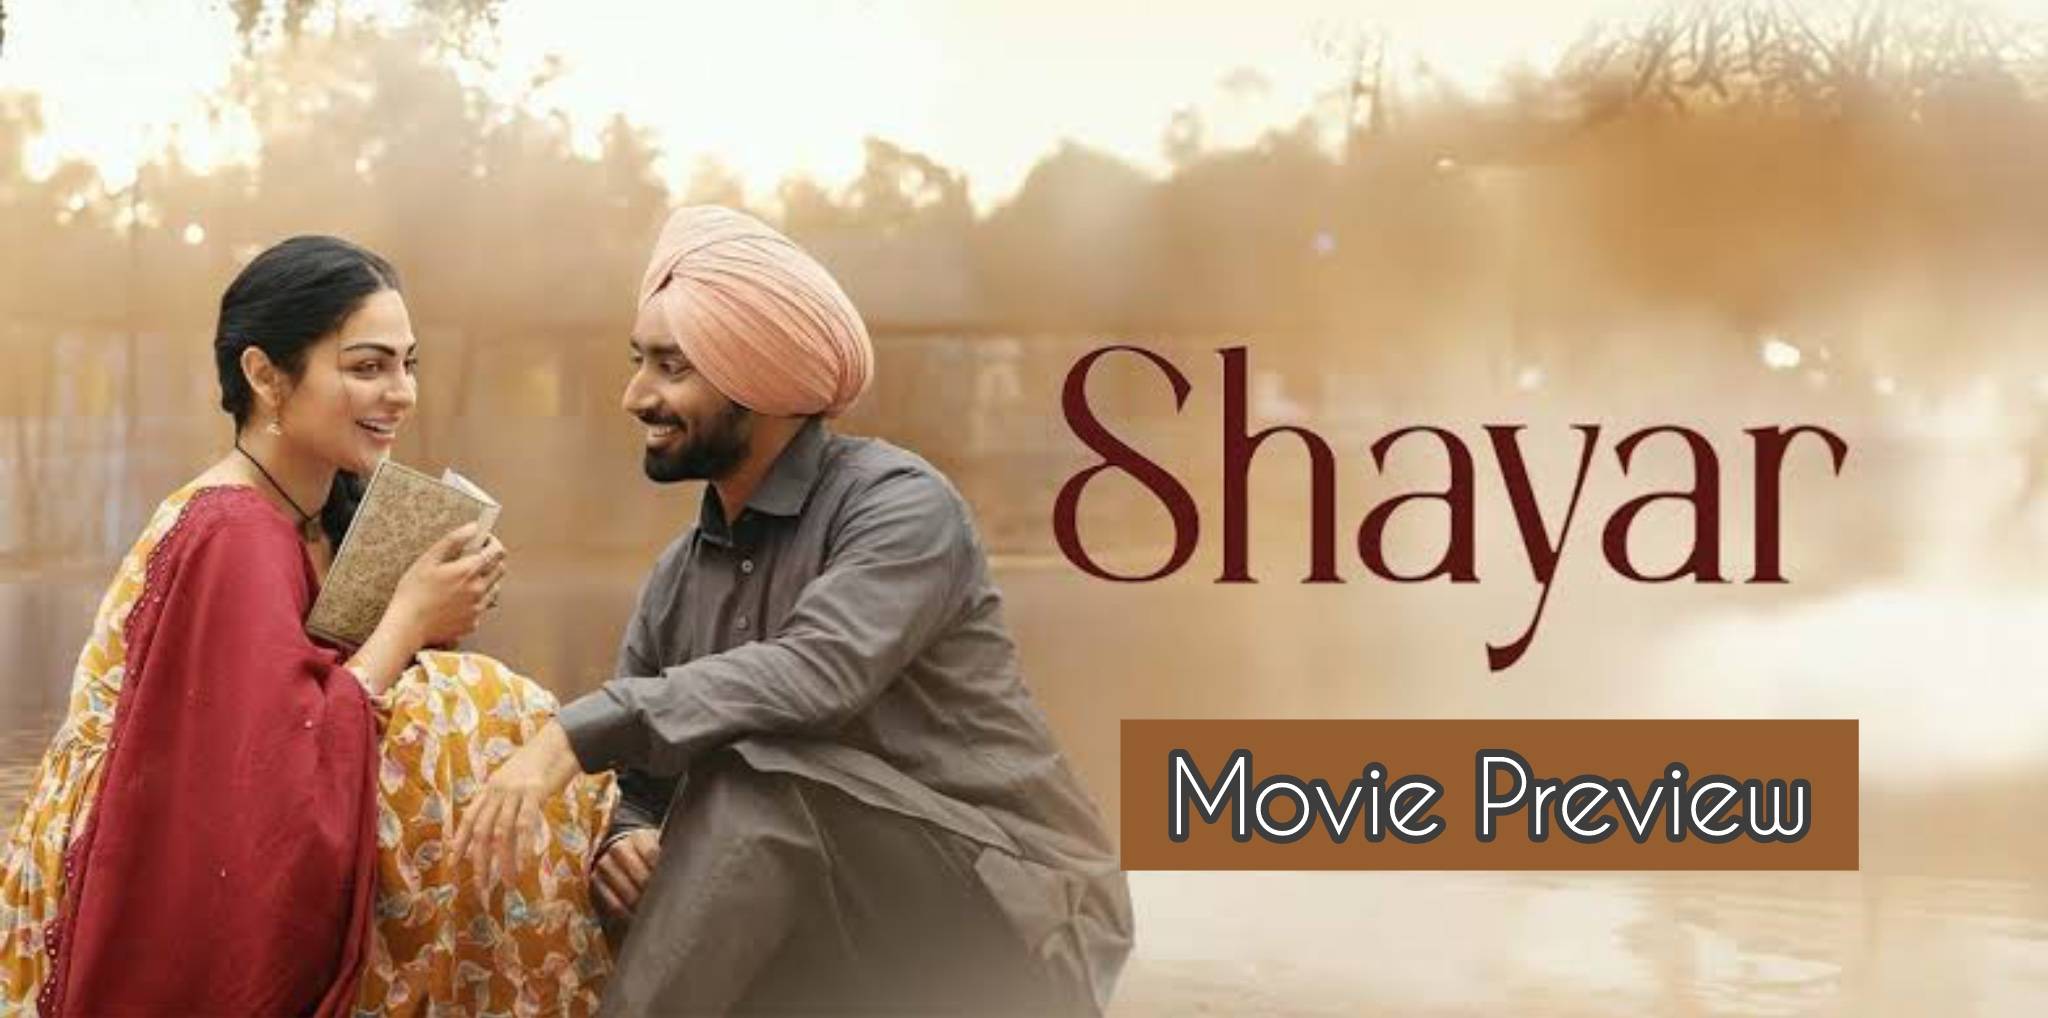 Shayar Preview: Neeru Bajwa & Satinder Sartaaj Tale That Resonates With Every Heart